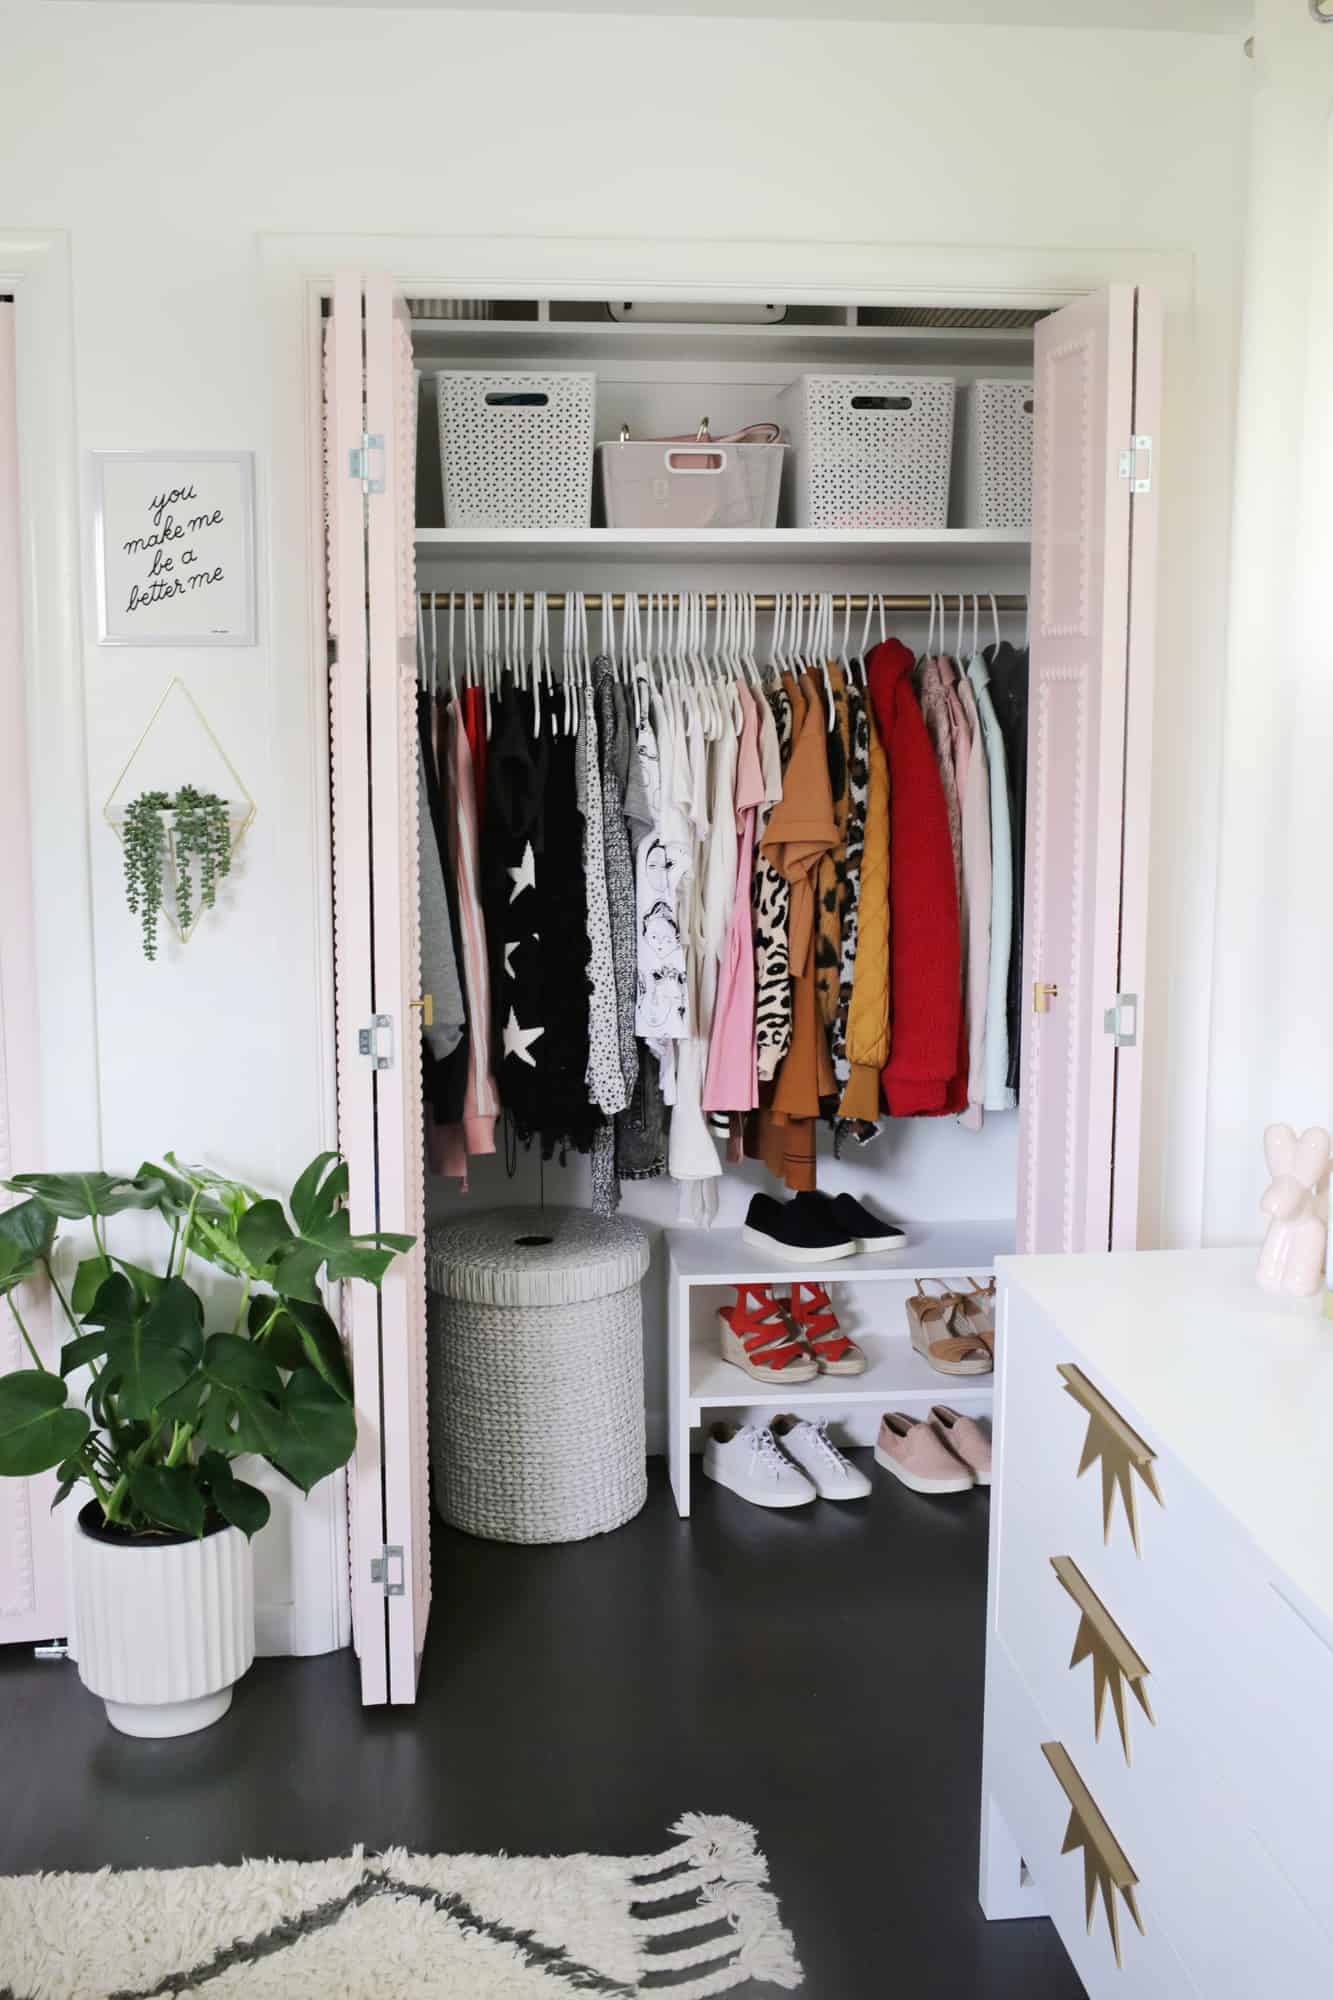 DIY Painted Wood Hangers + Lots of Closet Organization Tips!